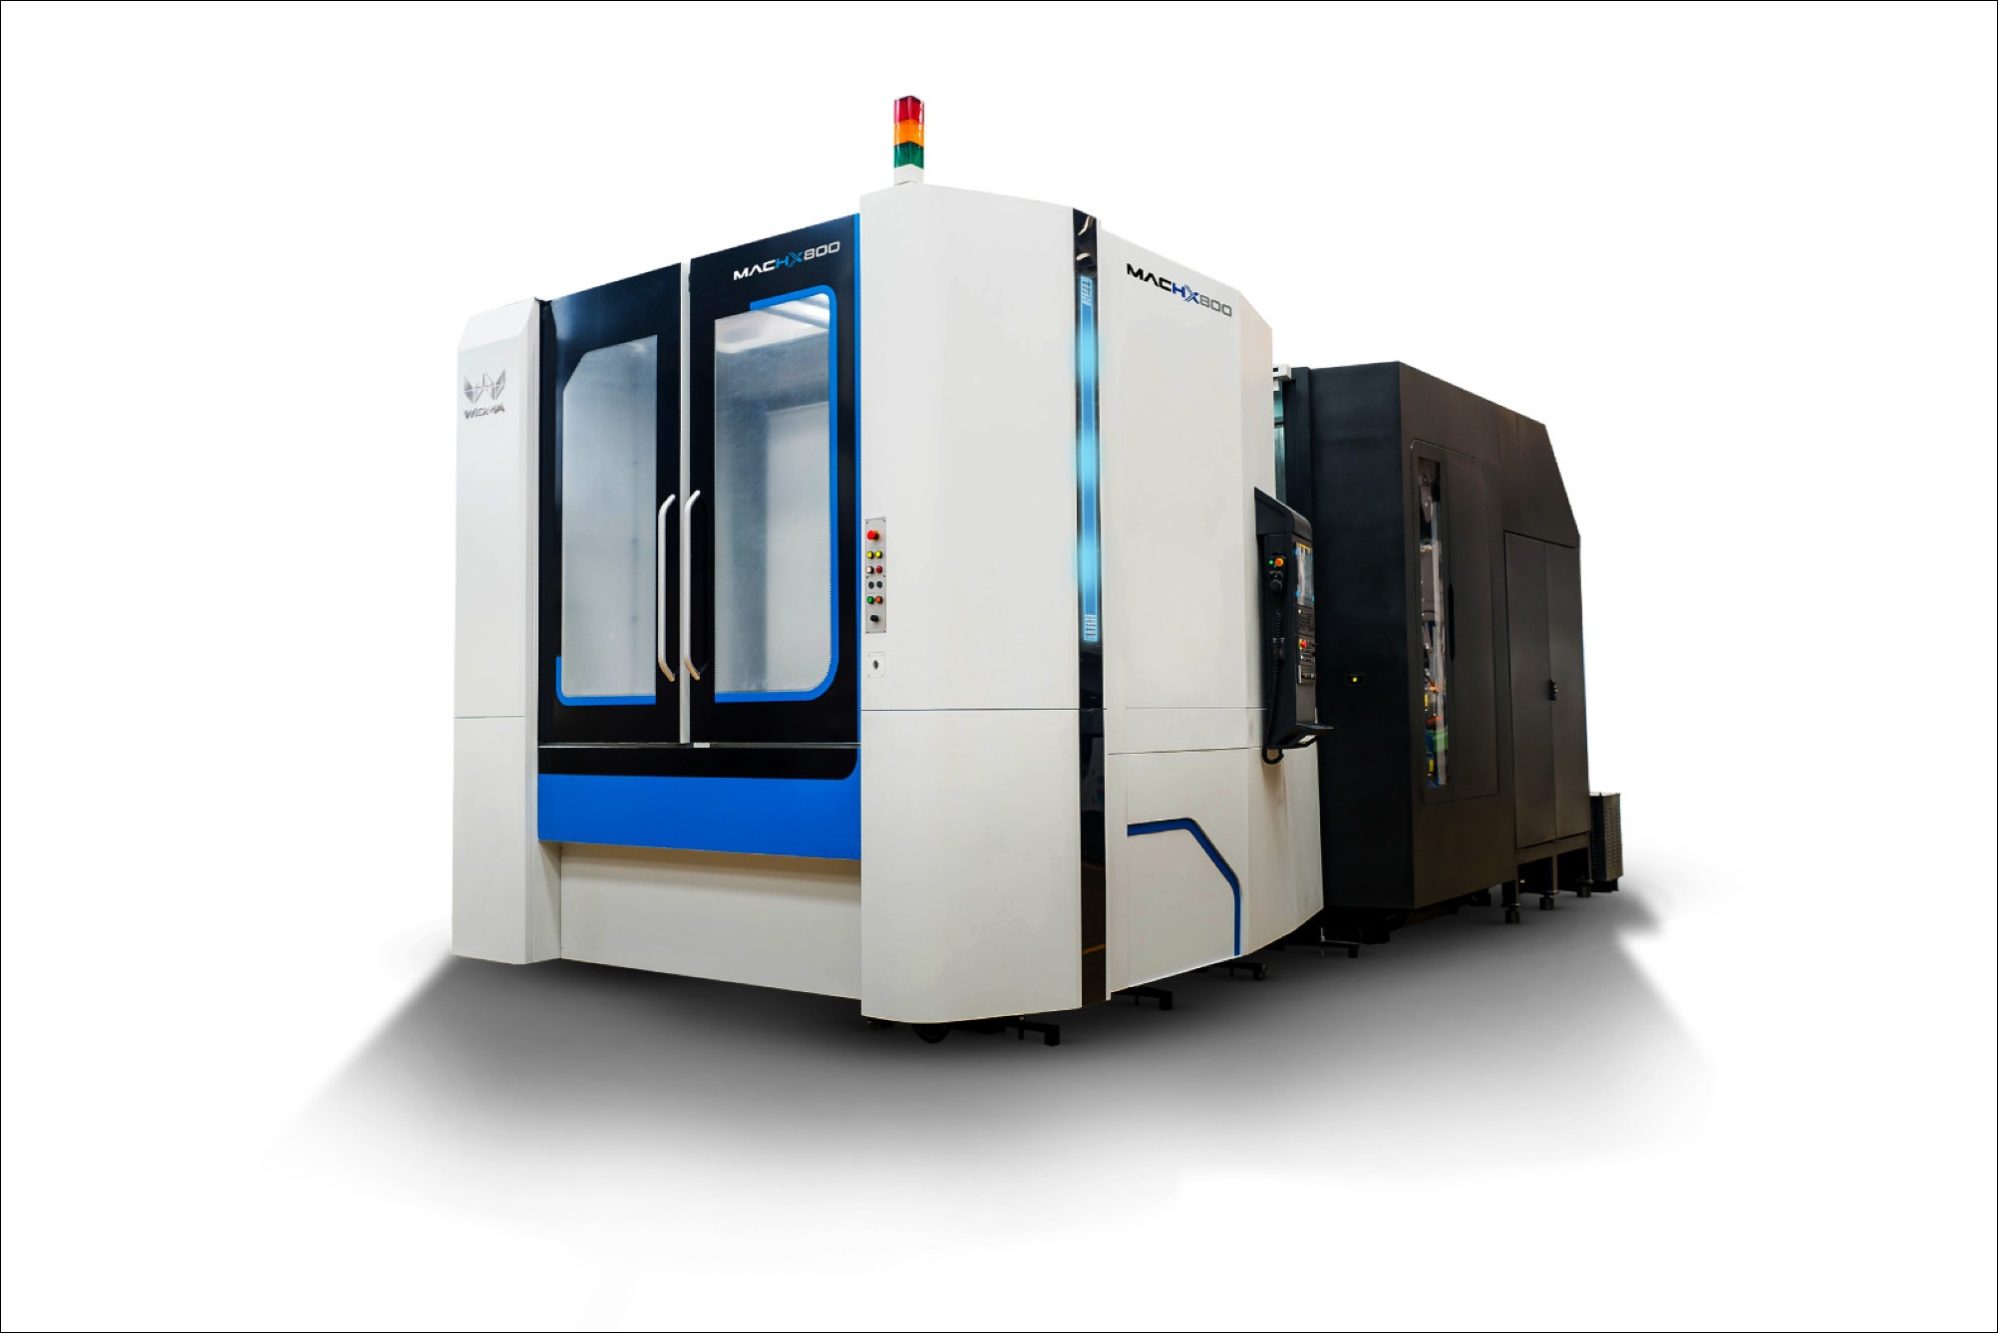 WIDMA introduces next-gen horizontal machining center MacHX800 HMC designed for large part machining and Industry 4.0 environments.